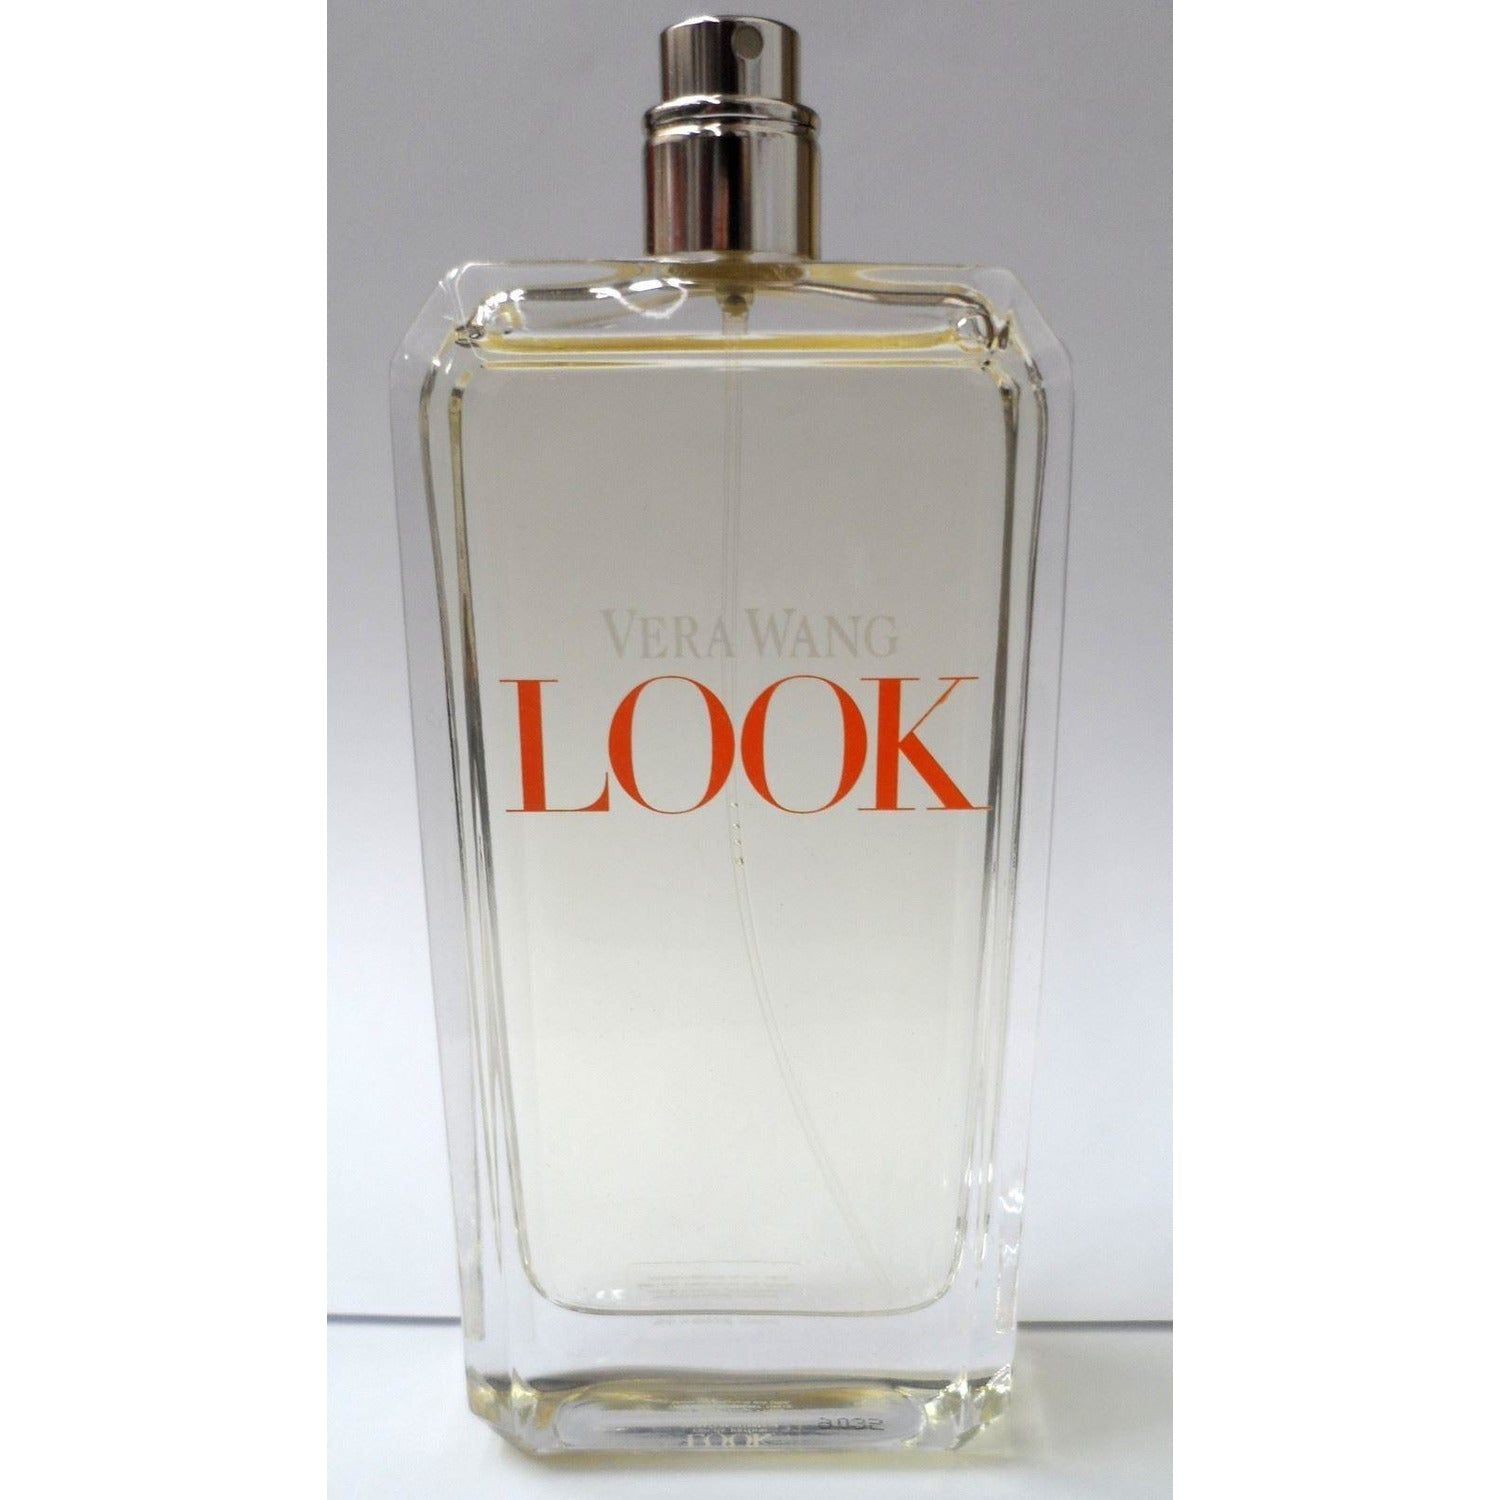 LOOK by VERA WANG Perfume Women 3.4 oz edp New Tester